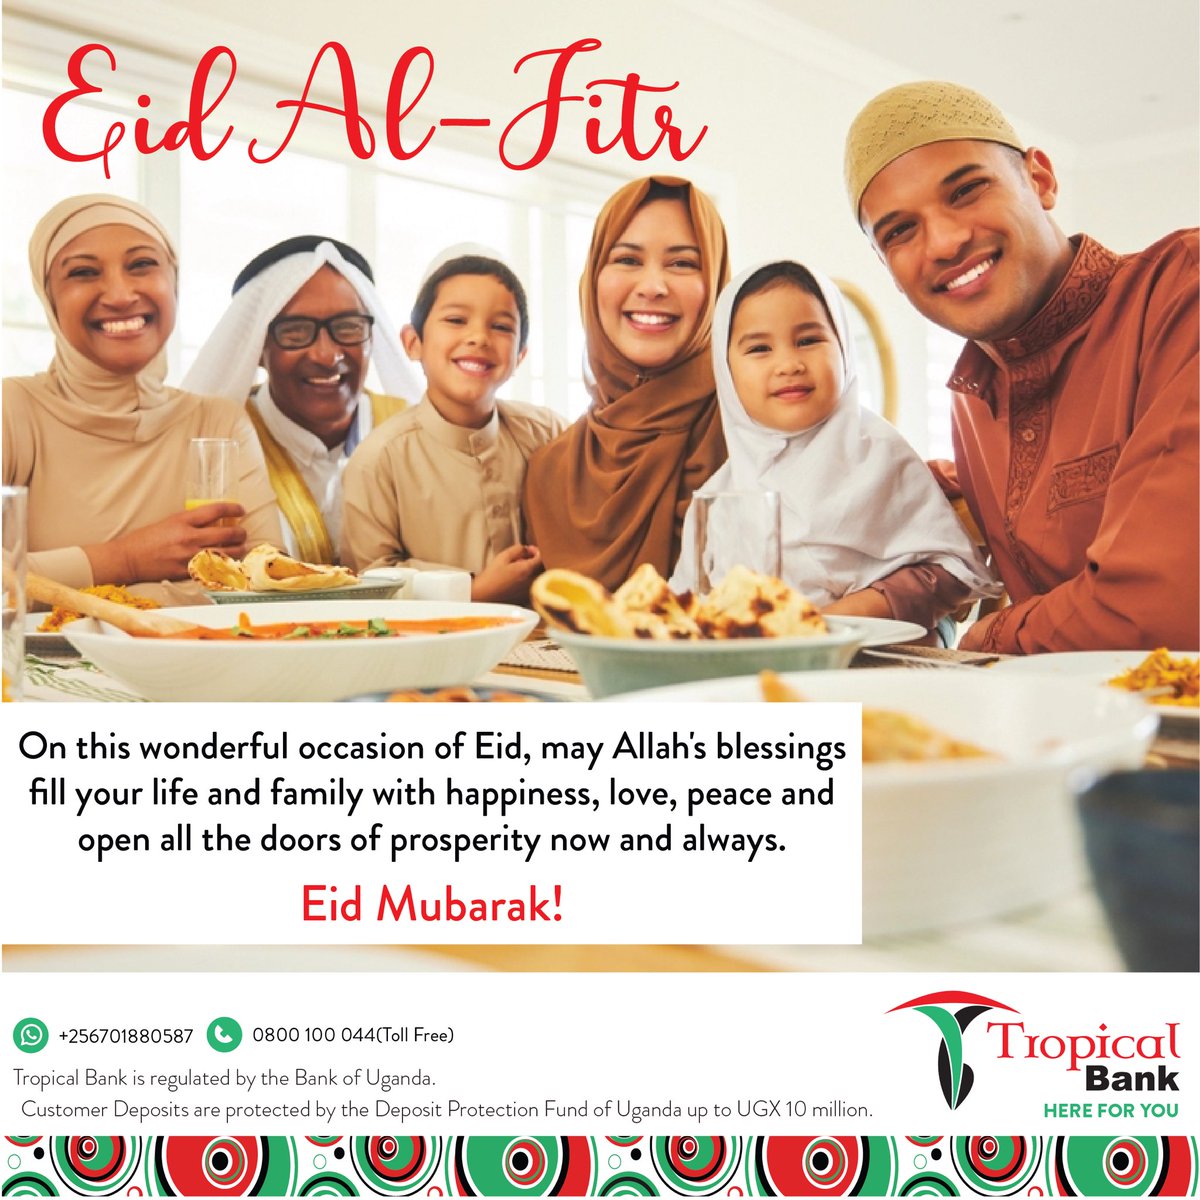 Eid Mubarak! Eid Mubarak!
#hereforyou #SalamRamadhan #SalamDaawa #SalamUpdates